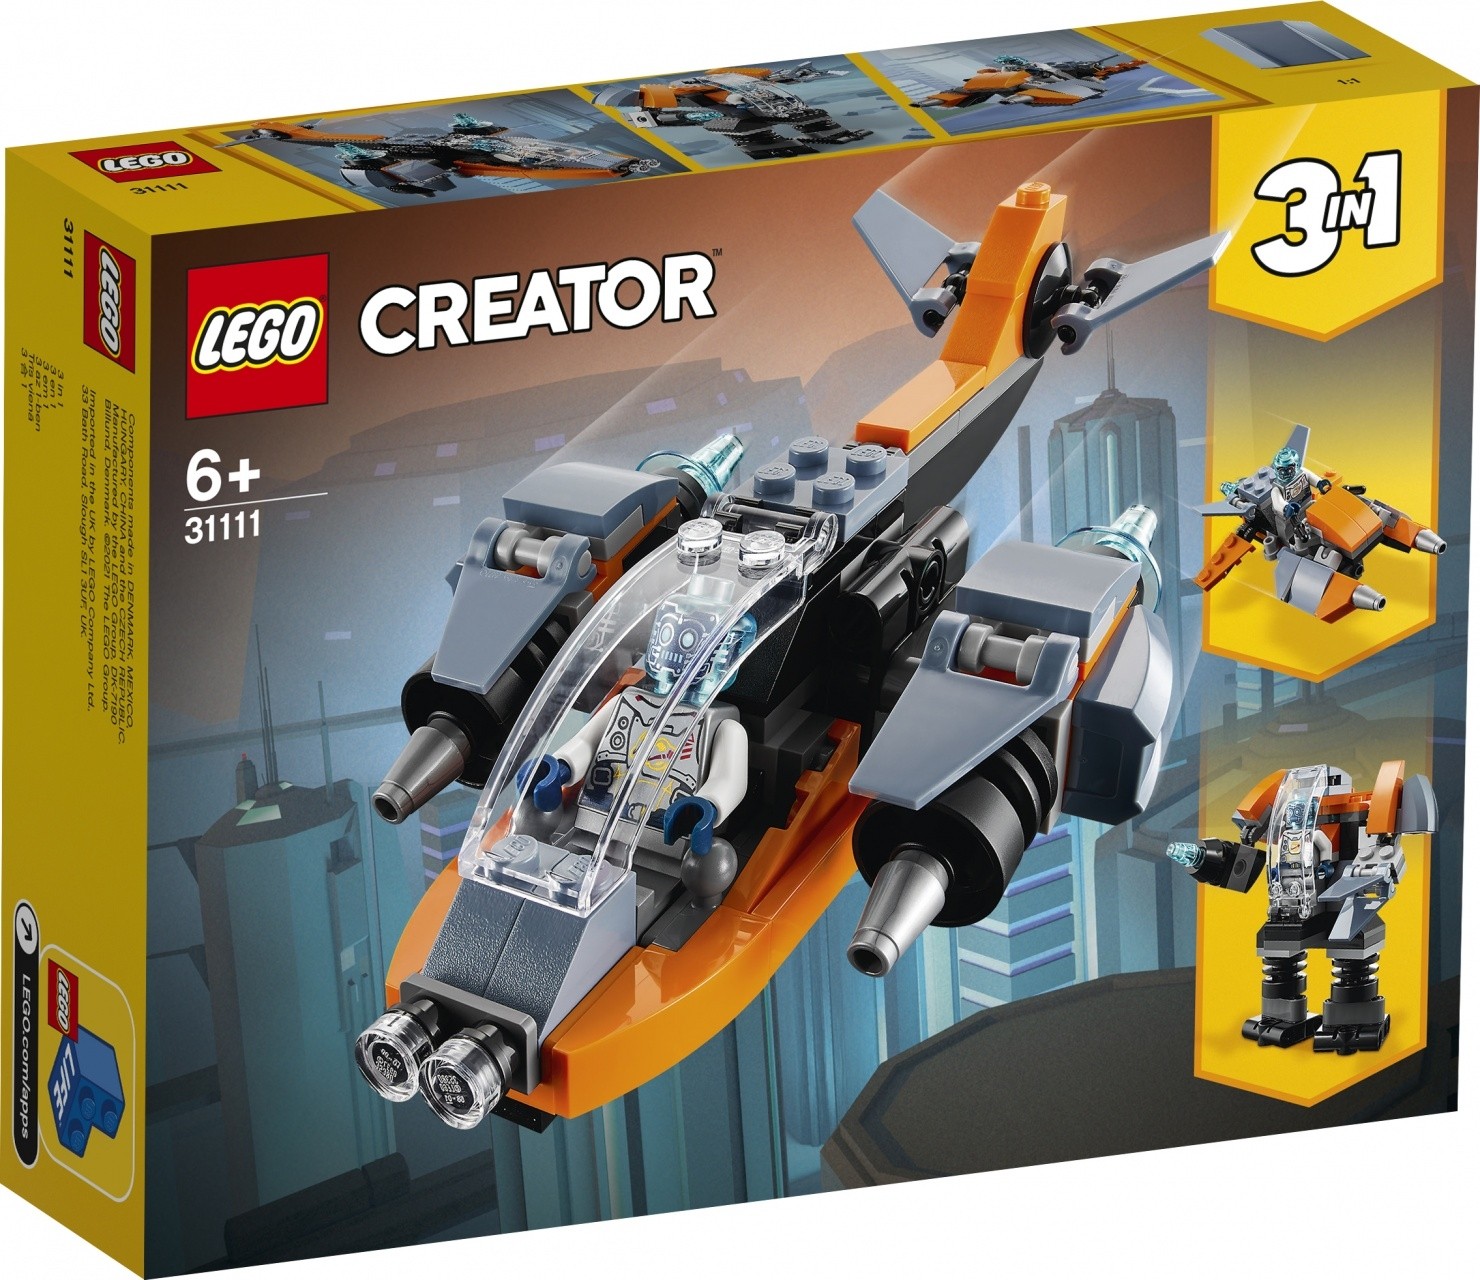 LEGO Creator Cyber-drone - 31111